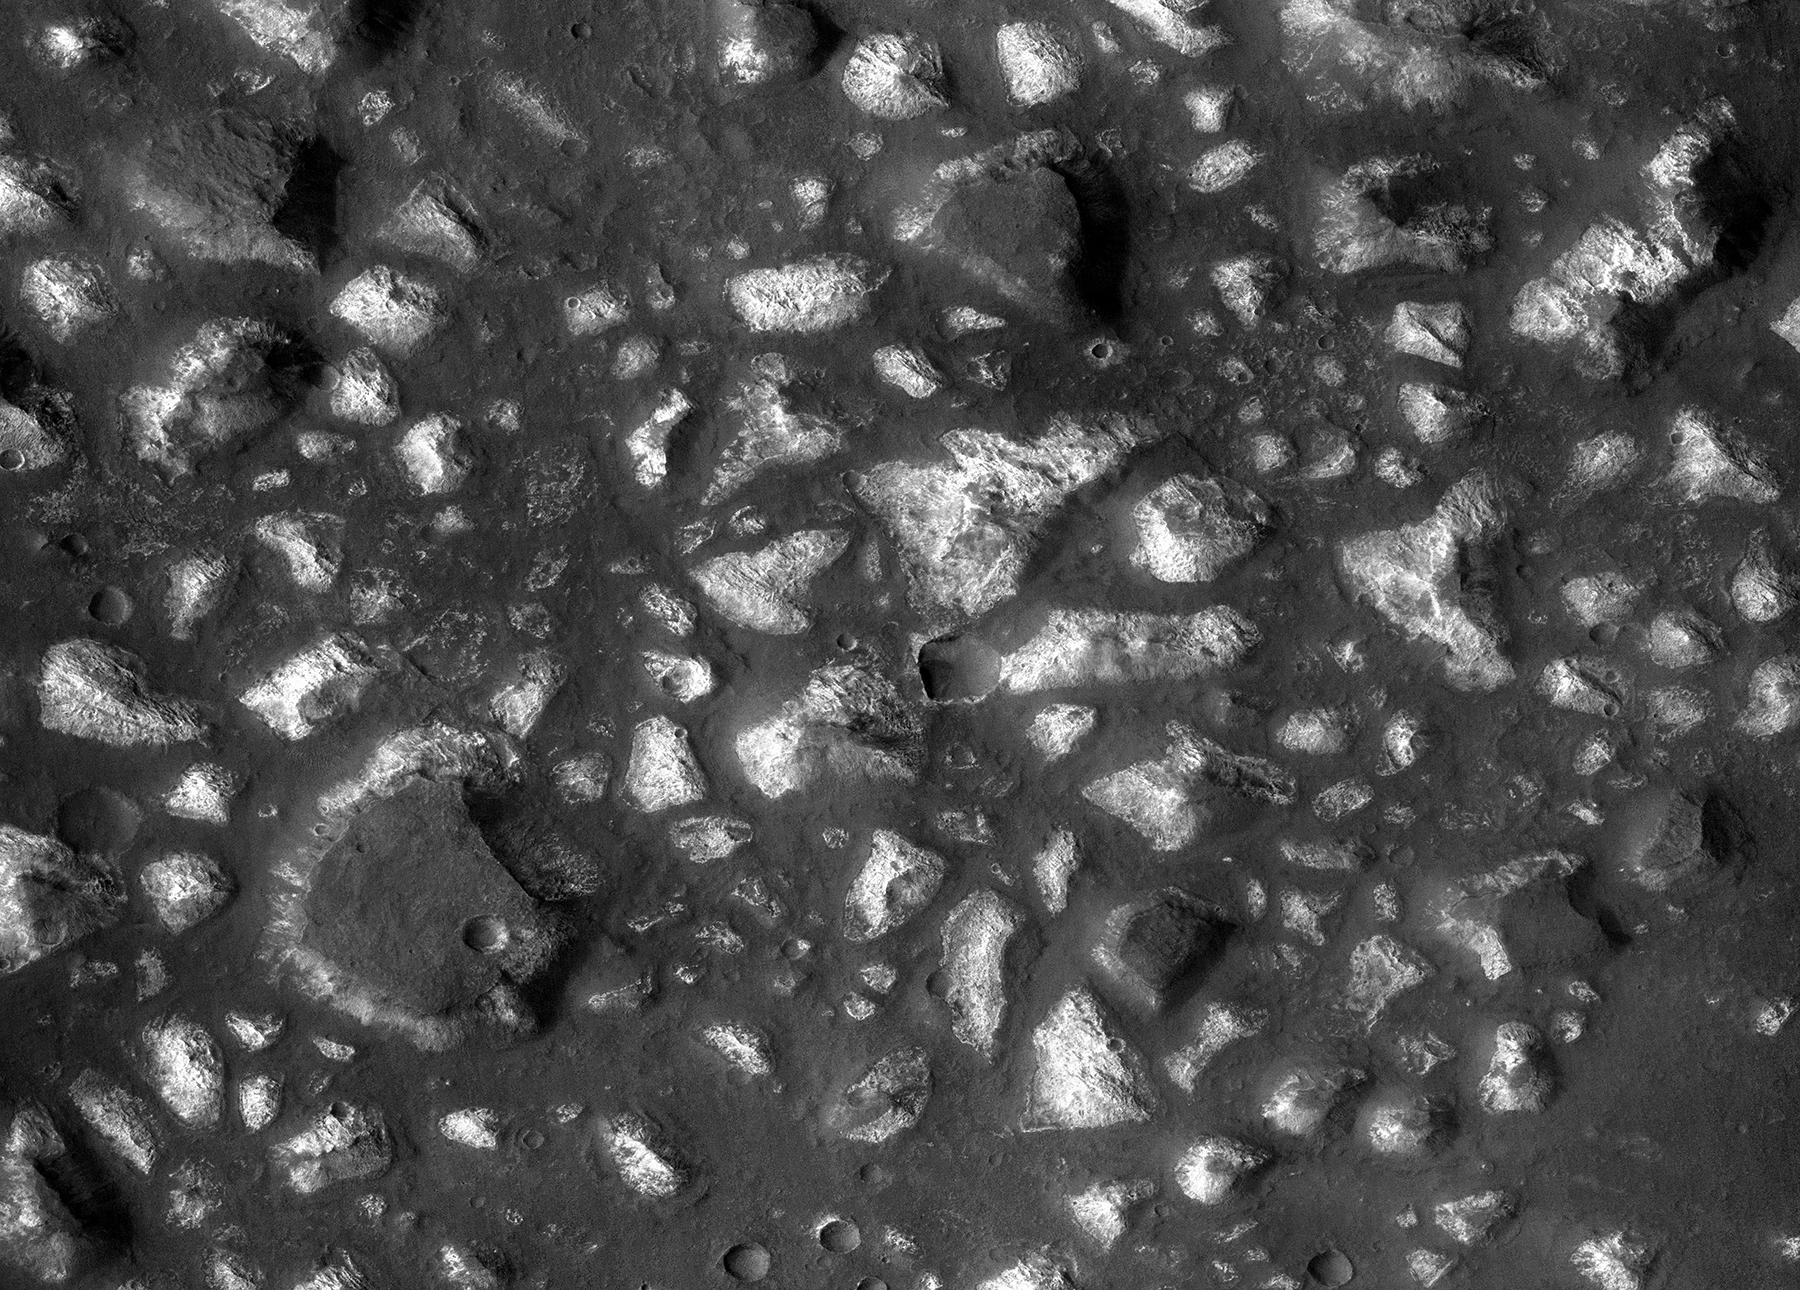 Possible Floor of an Ancient Martian Sea